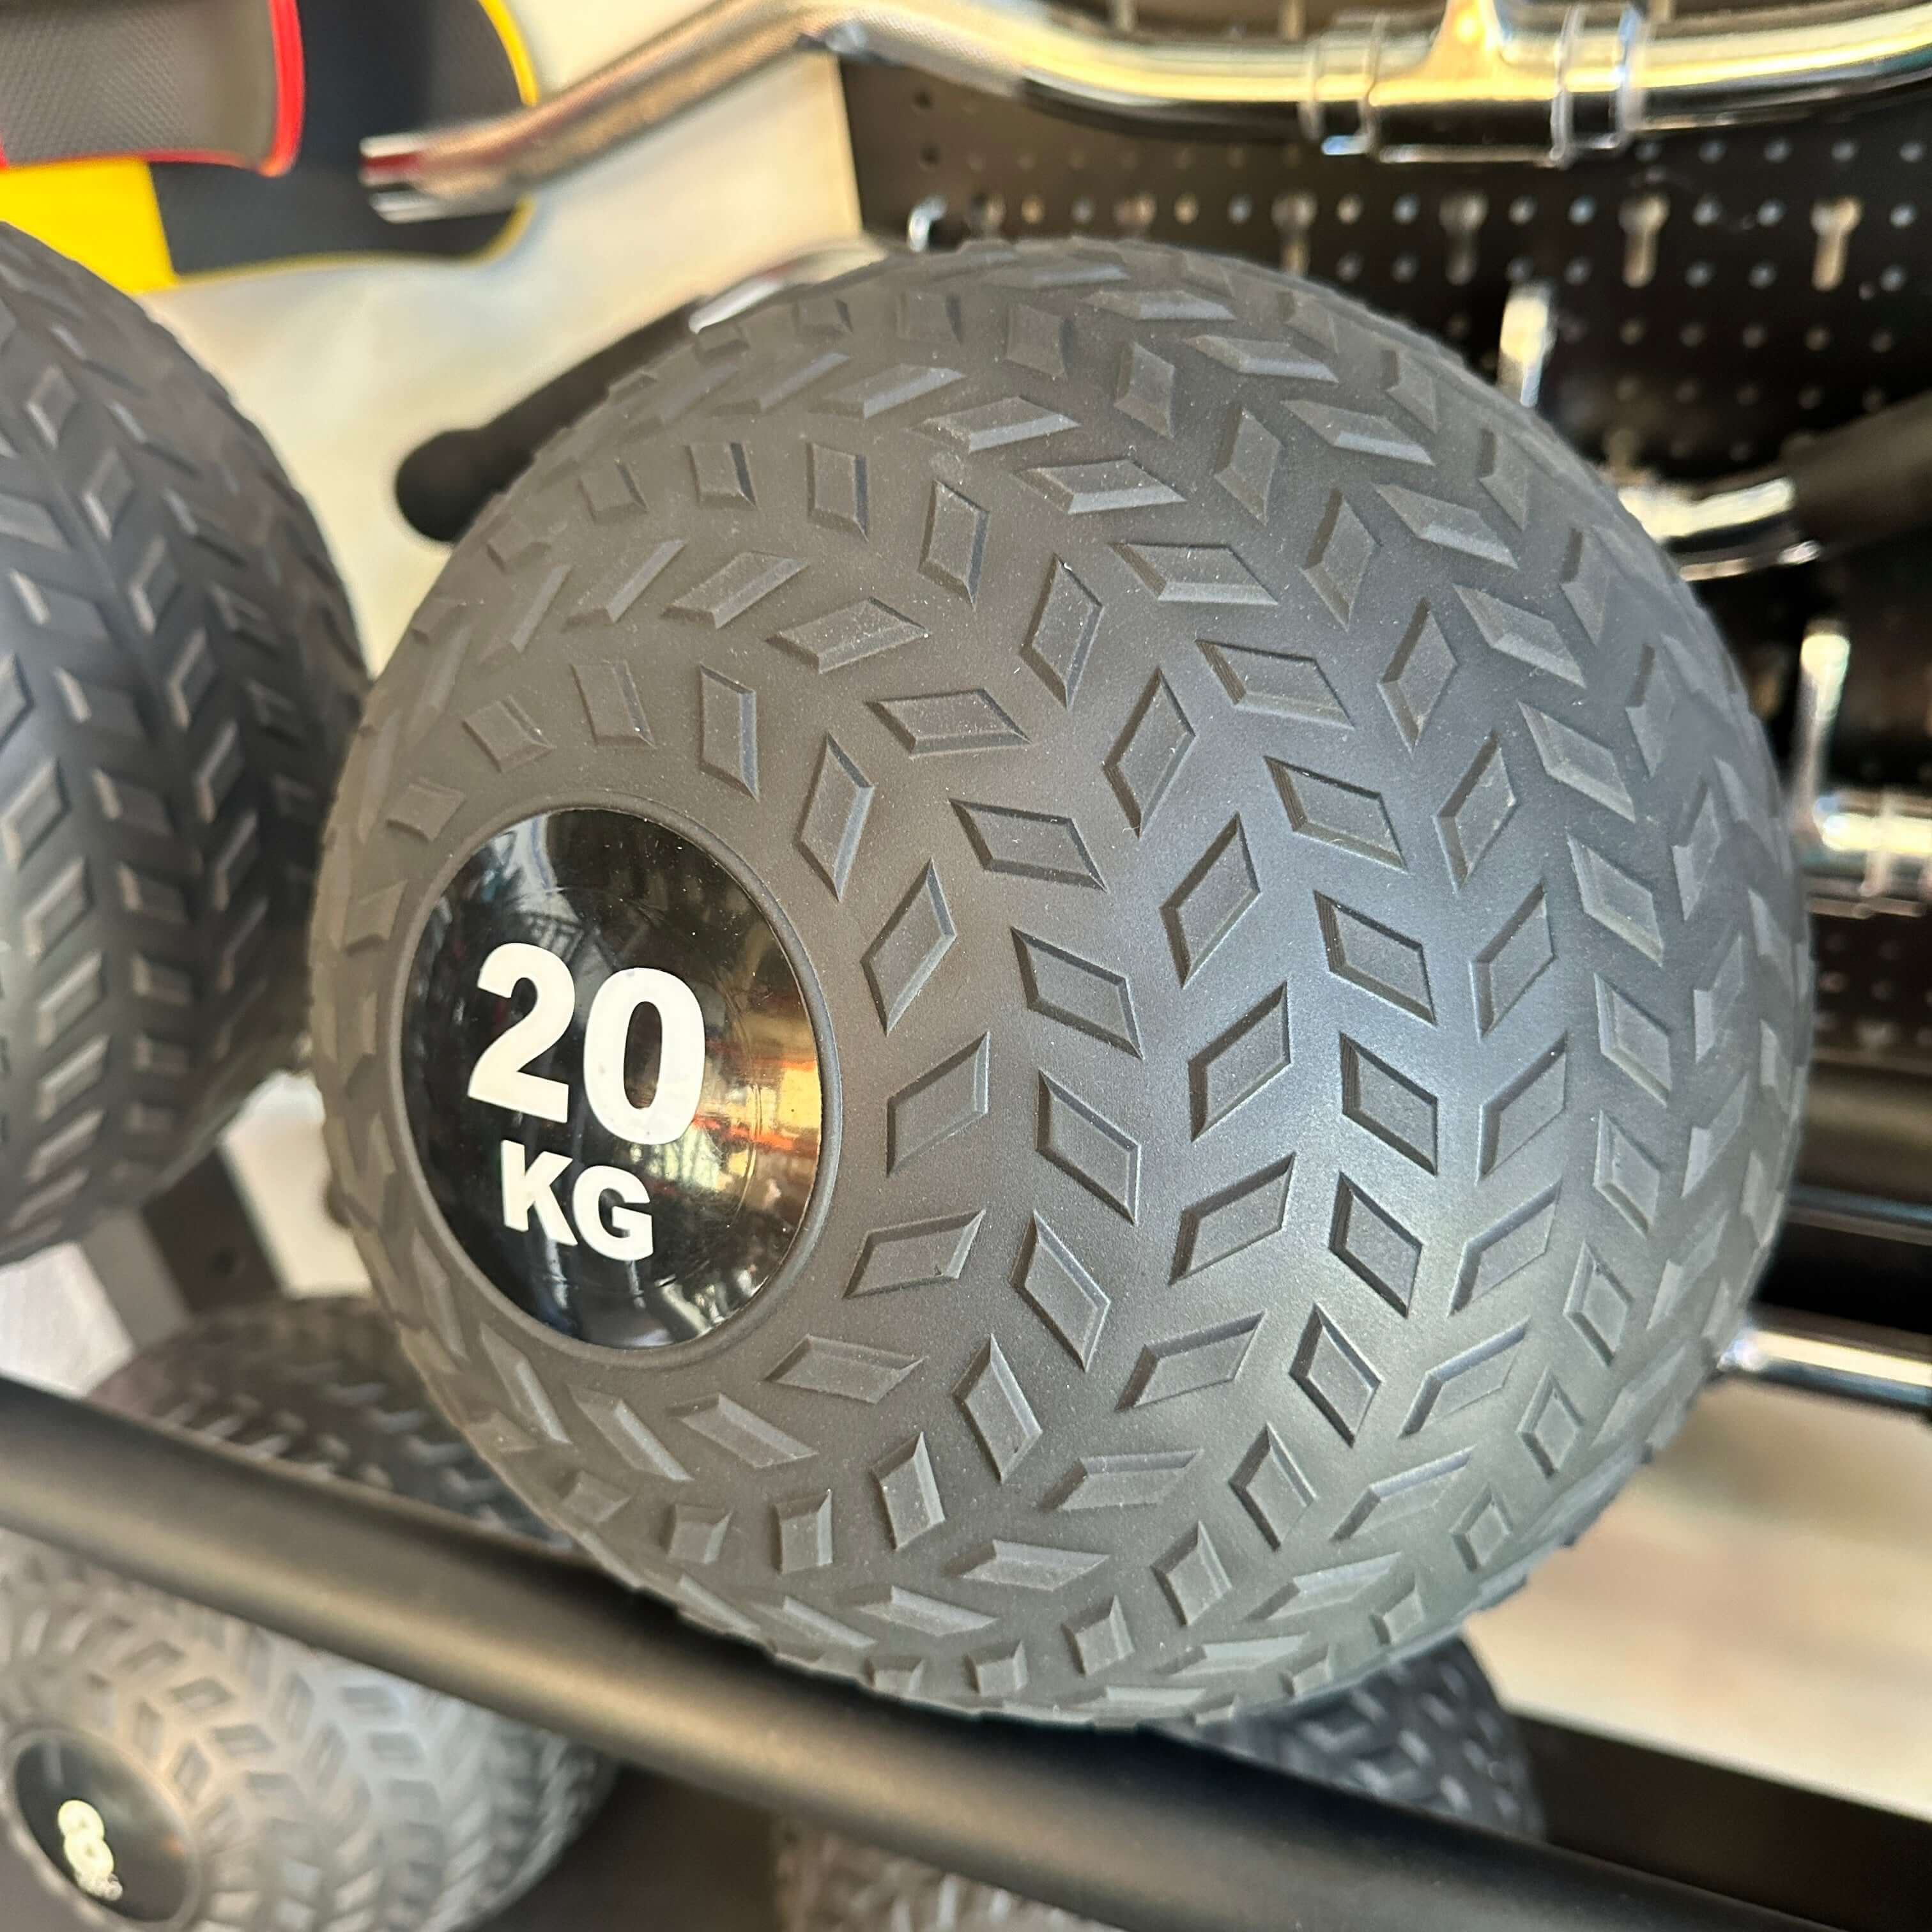 Heavy 4 Pack of Tyre Thread Slam Balls - 12kg 15kg 20kg 30kg | INSOURCE